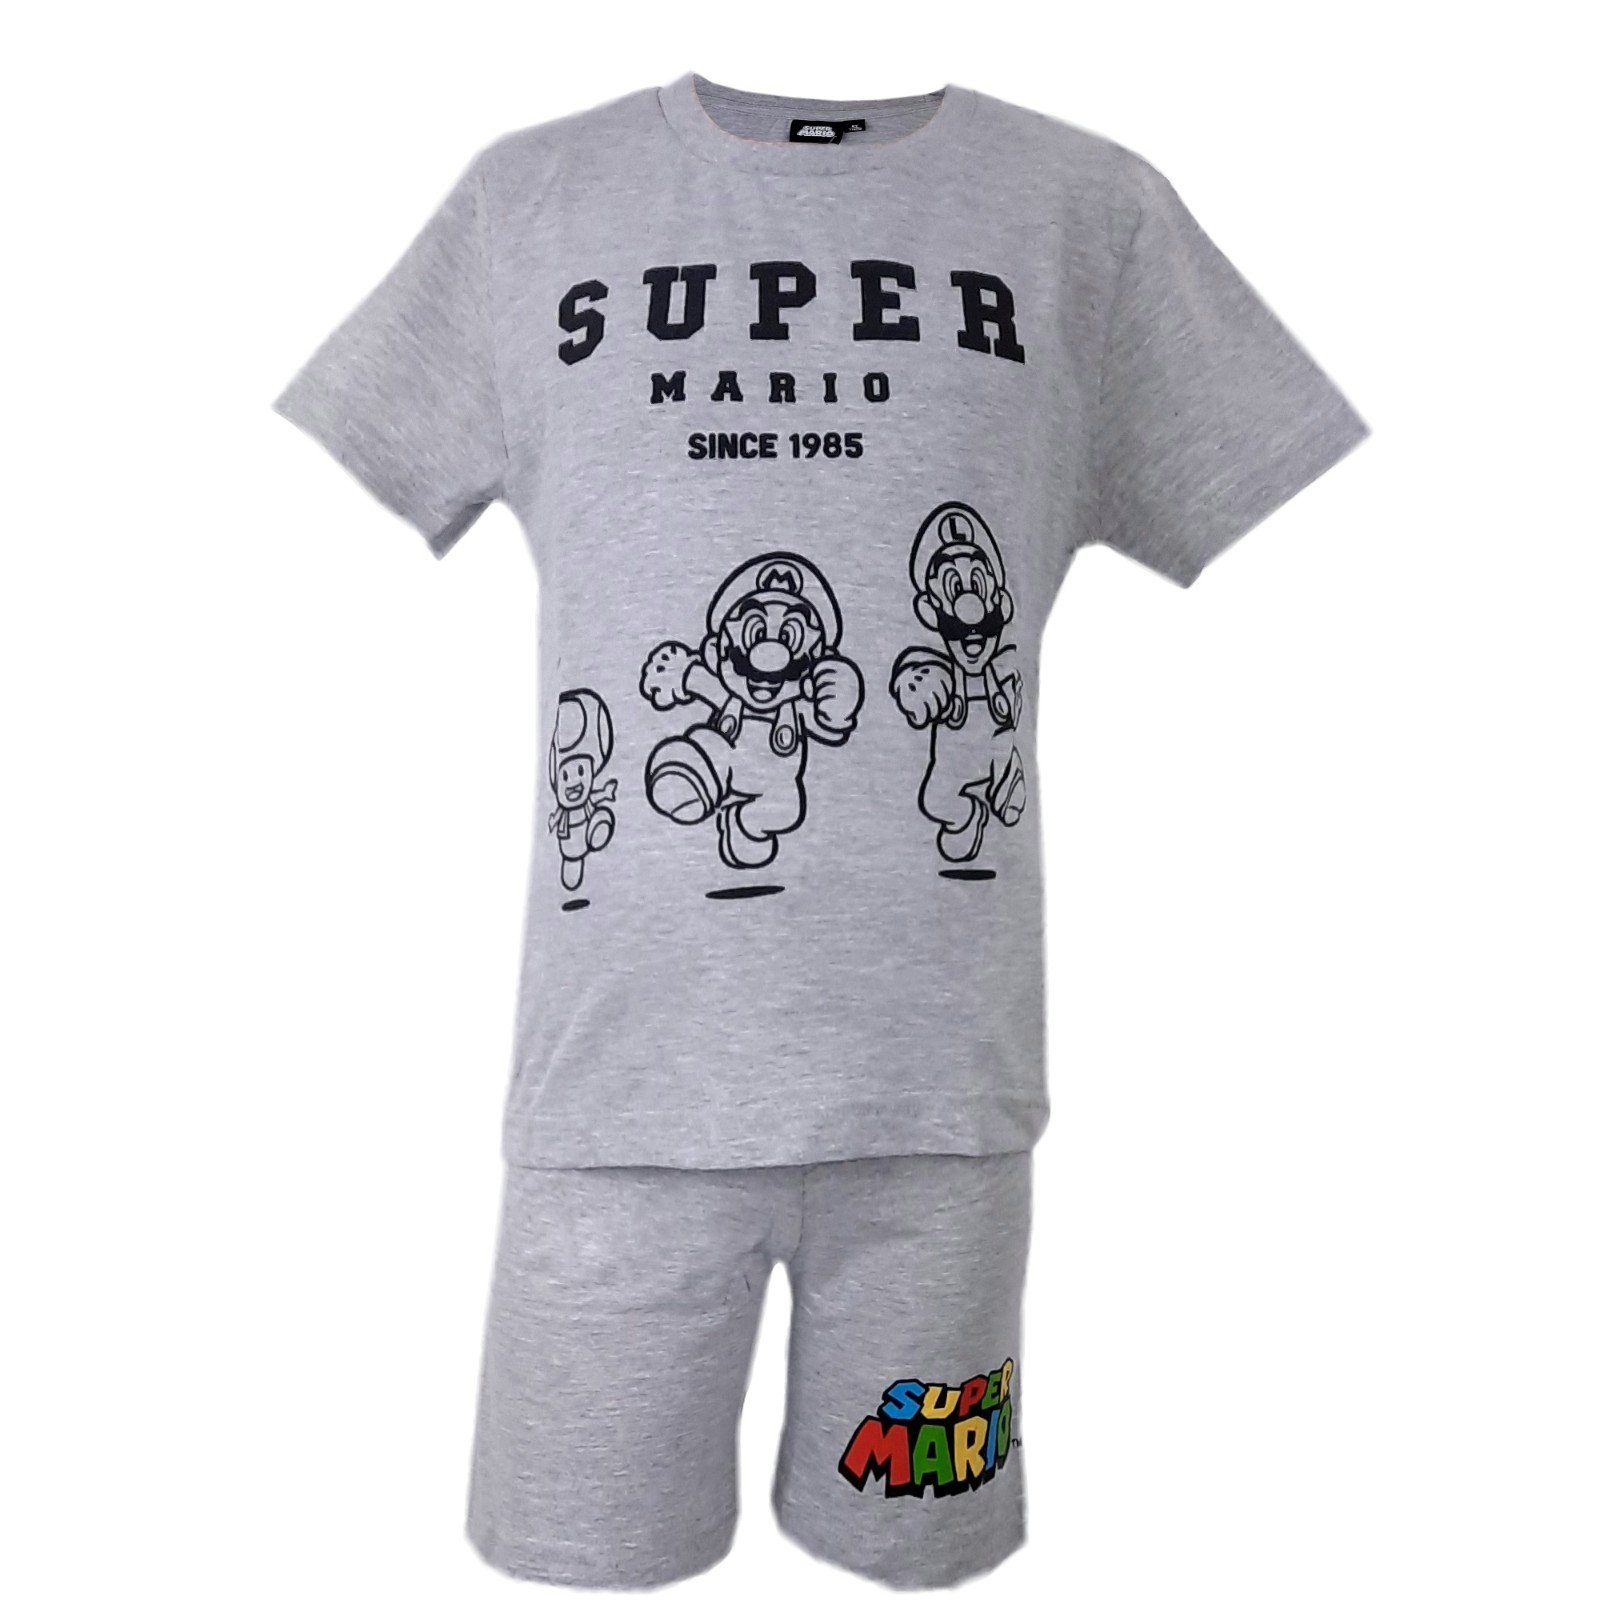 Super Mario Pyjama Super Mario 2 tlg. Kinder Pyjama (2 Stück) Gr. 104,116, Baumwolle